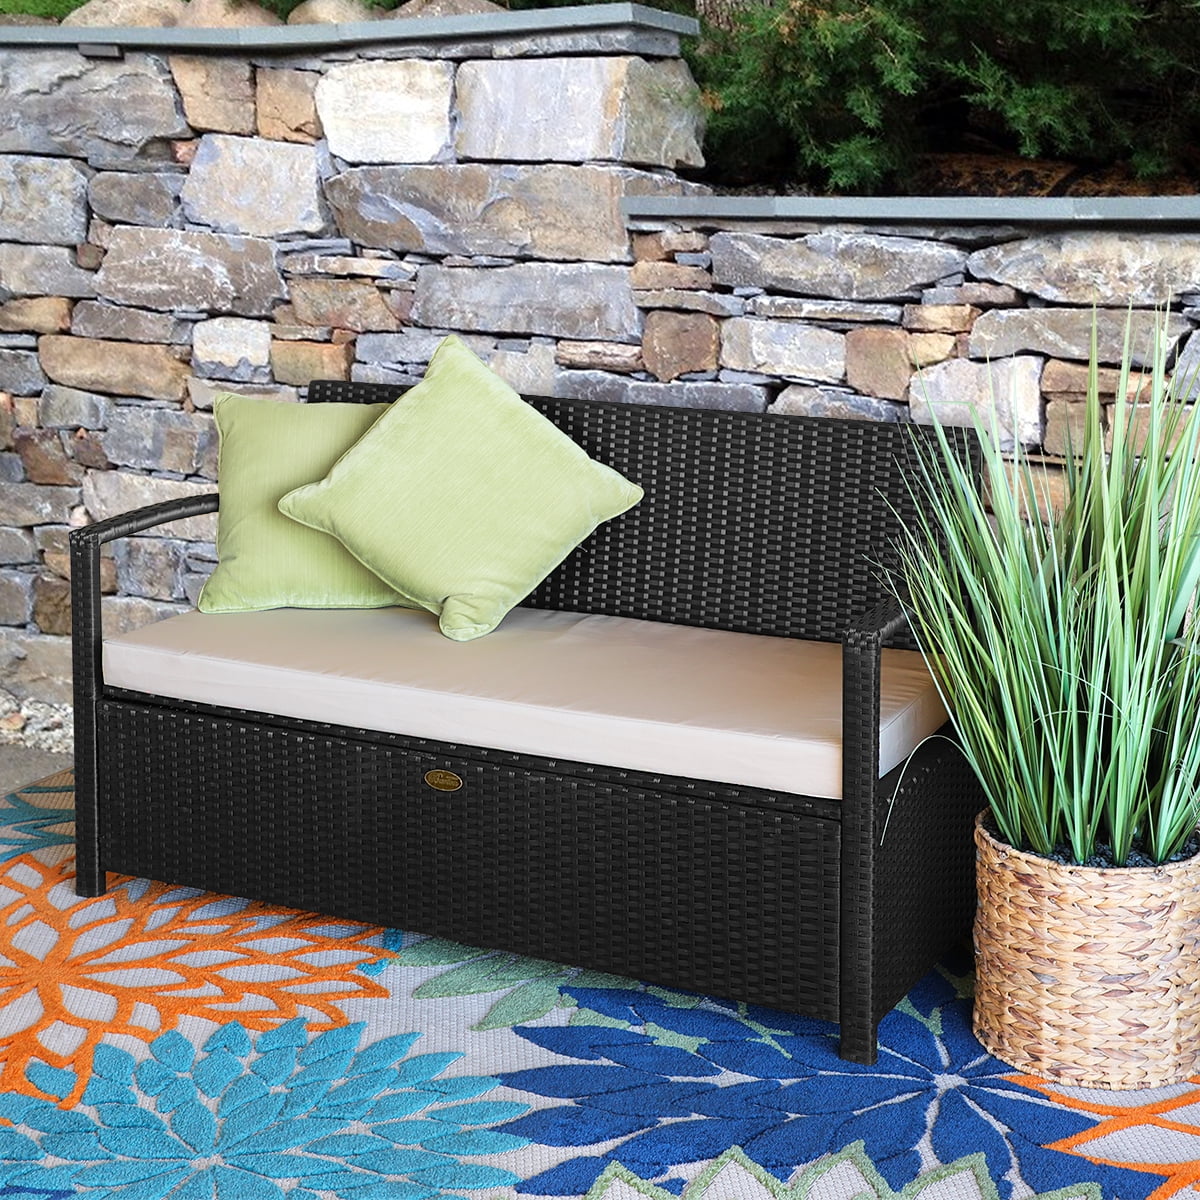 2 In 1 Outdoor Deck Box Patio Storage, Outdoor Porch Seat With Storage